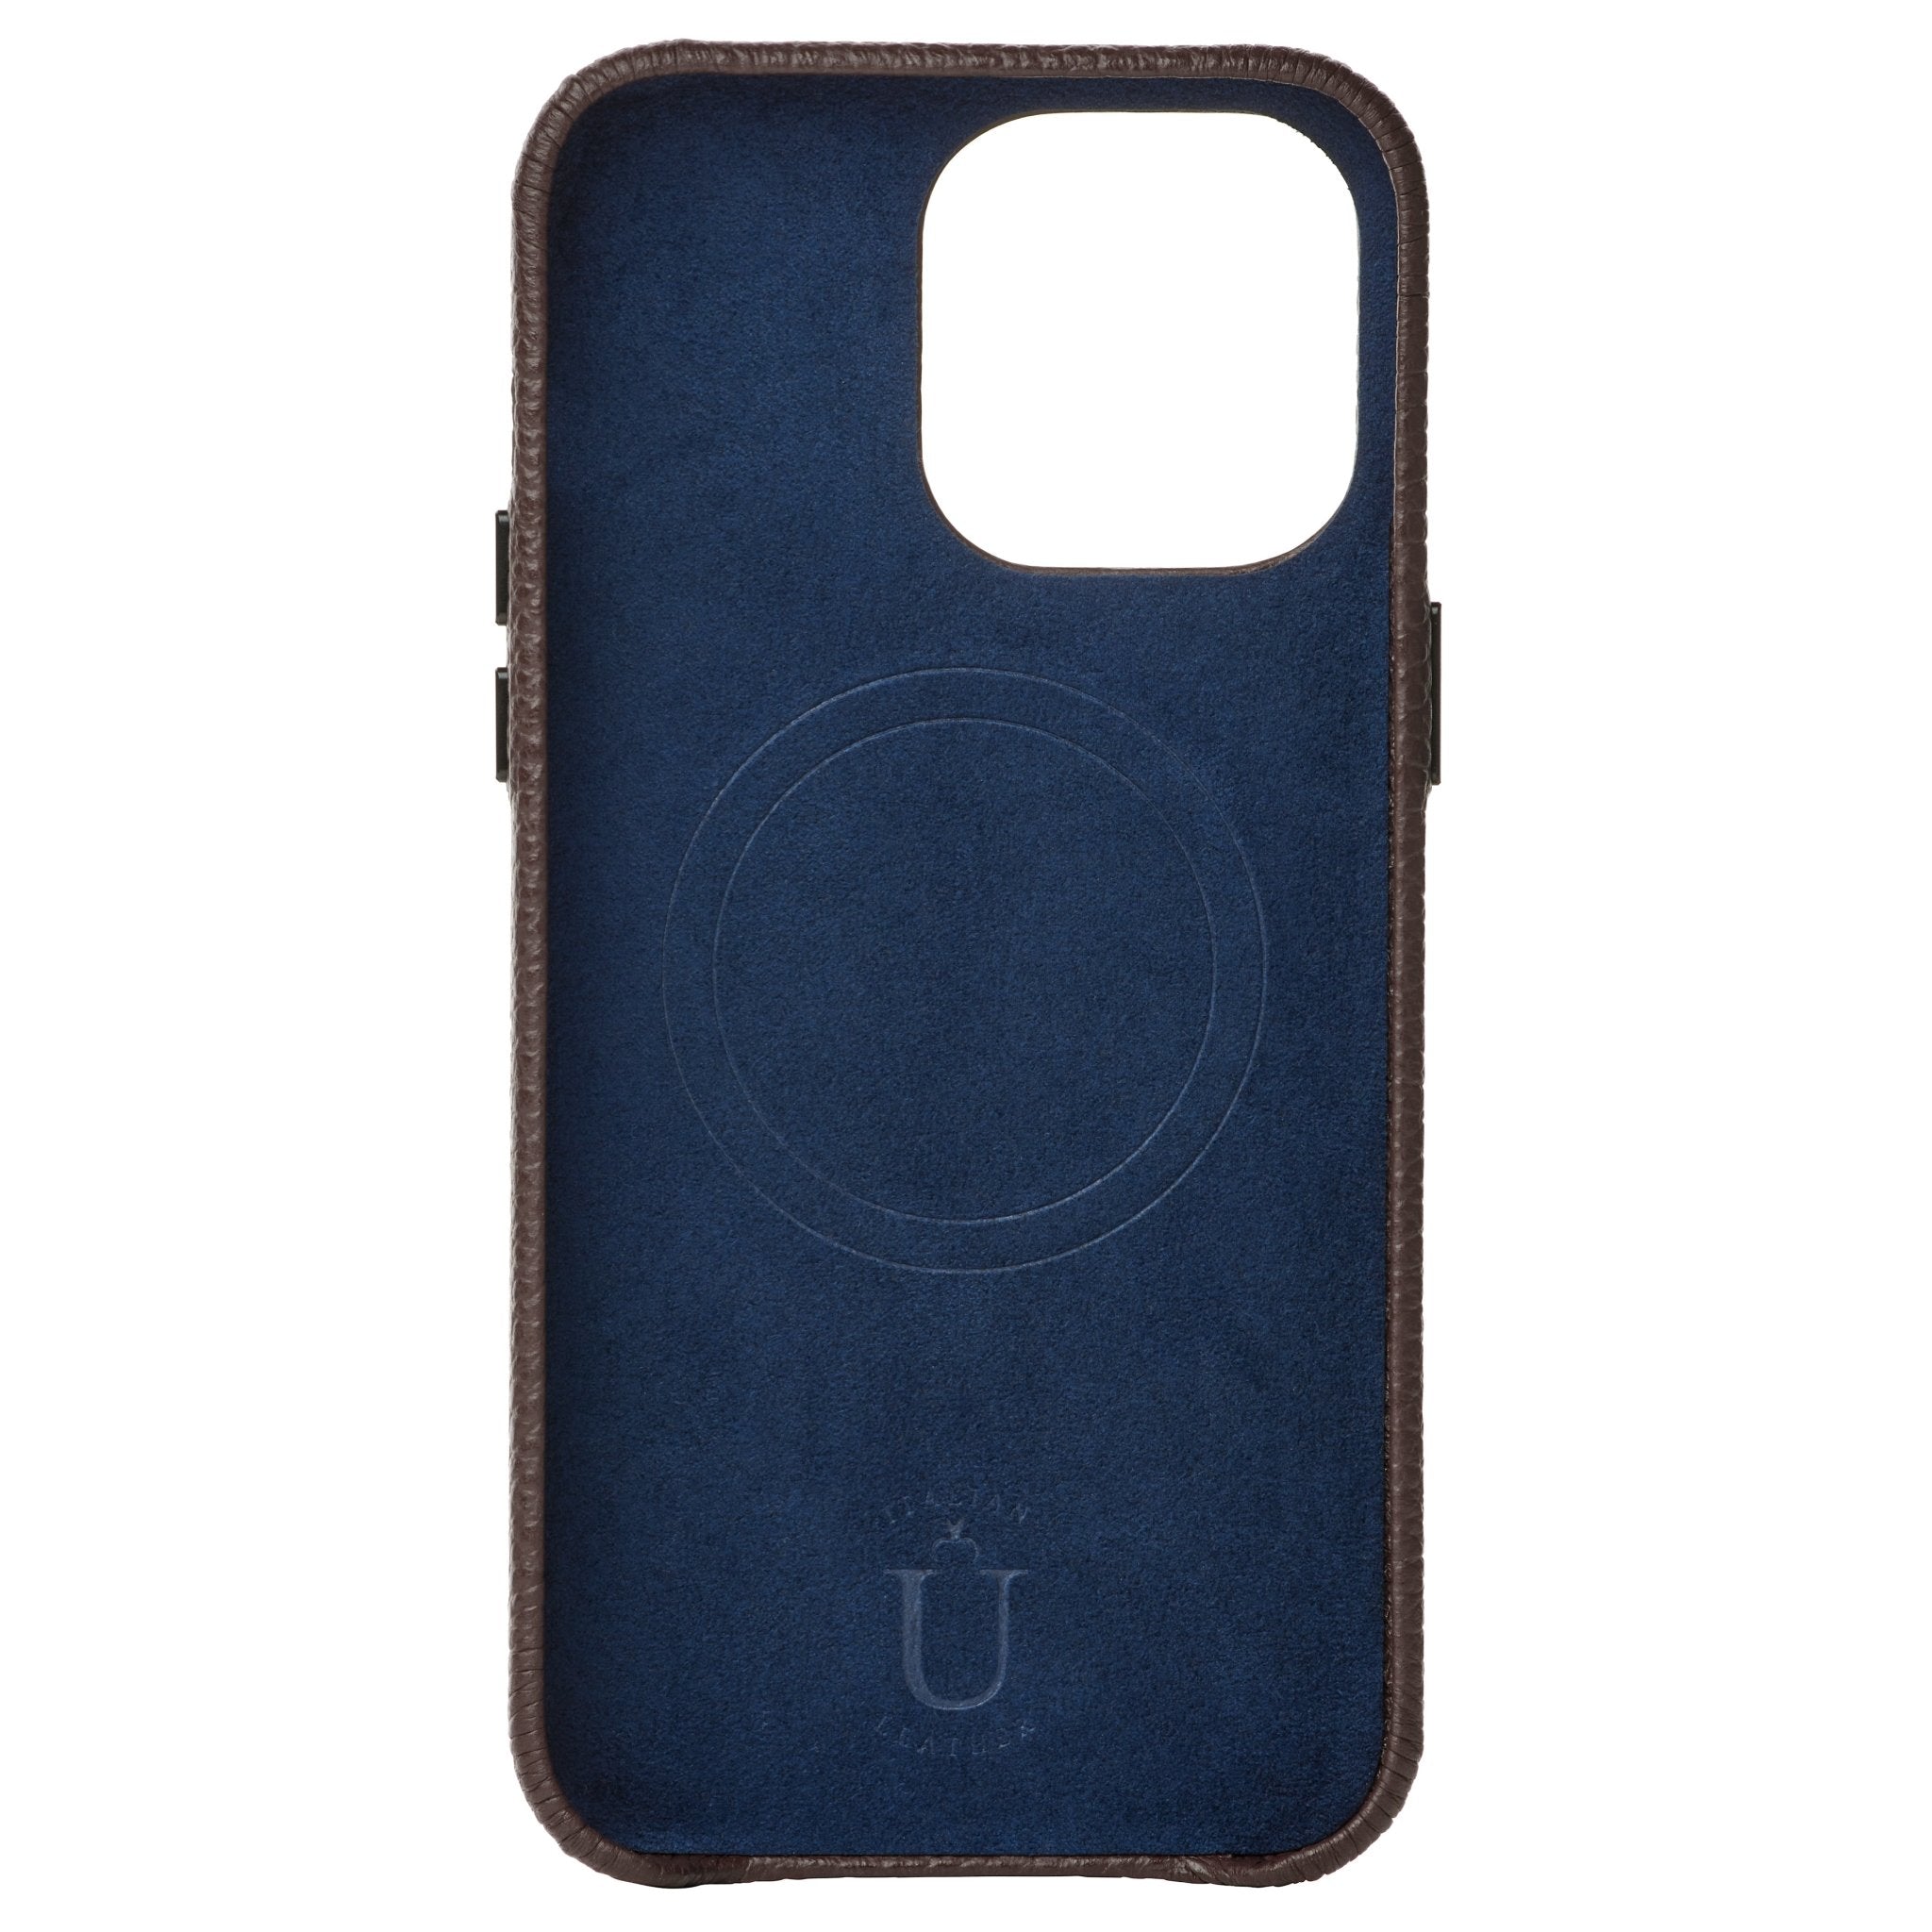 Ubique Italy Luxury iPhone Case 14 Pro Max Pebble Grain Leather Dark Walnut Inner Lining